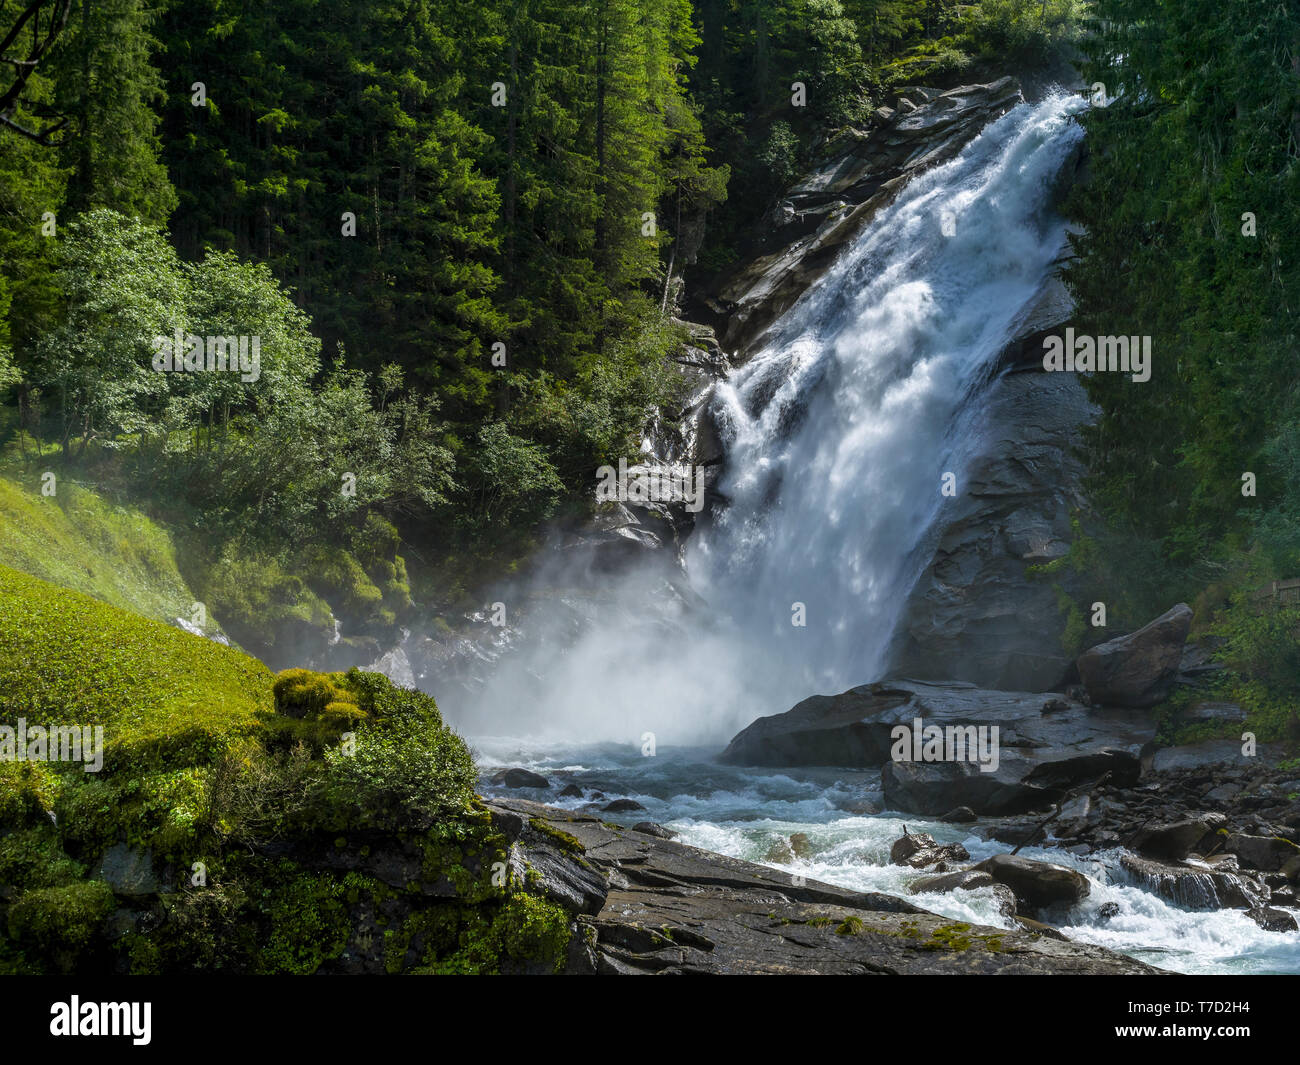 Krimmler Falls, Salzburger Land, Austria Foto de stock